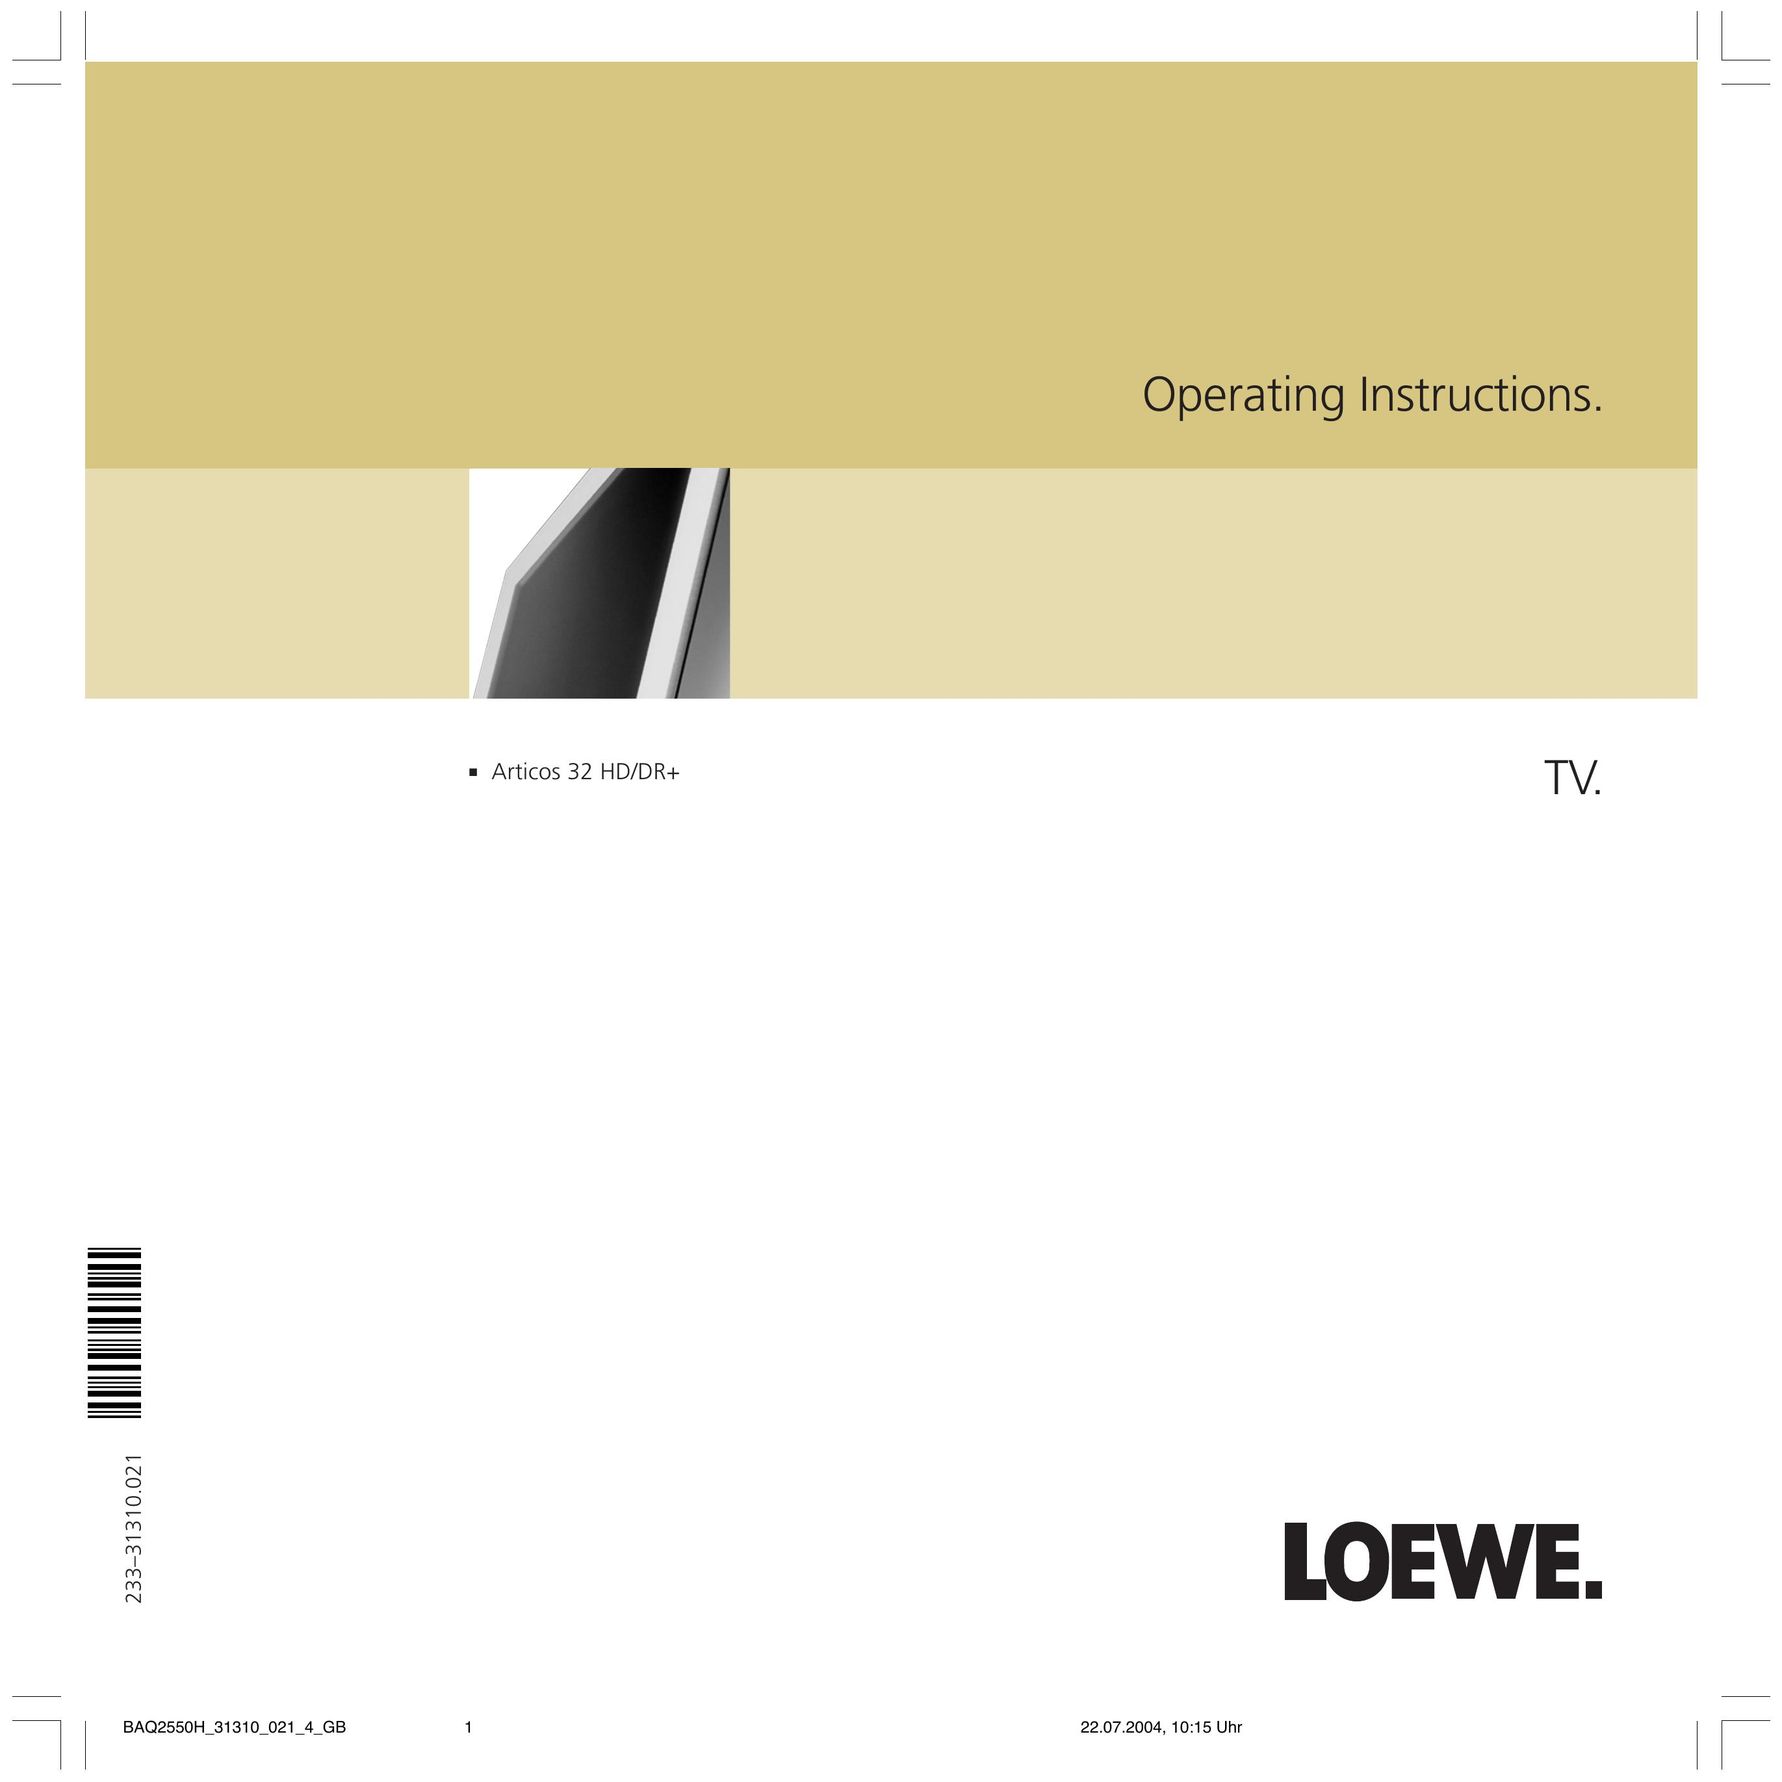 Loewe 32 HD/DR+ Flat Panel Television User Manual